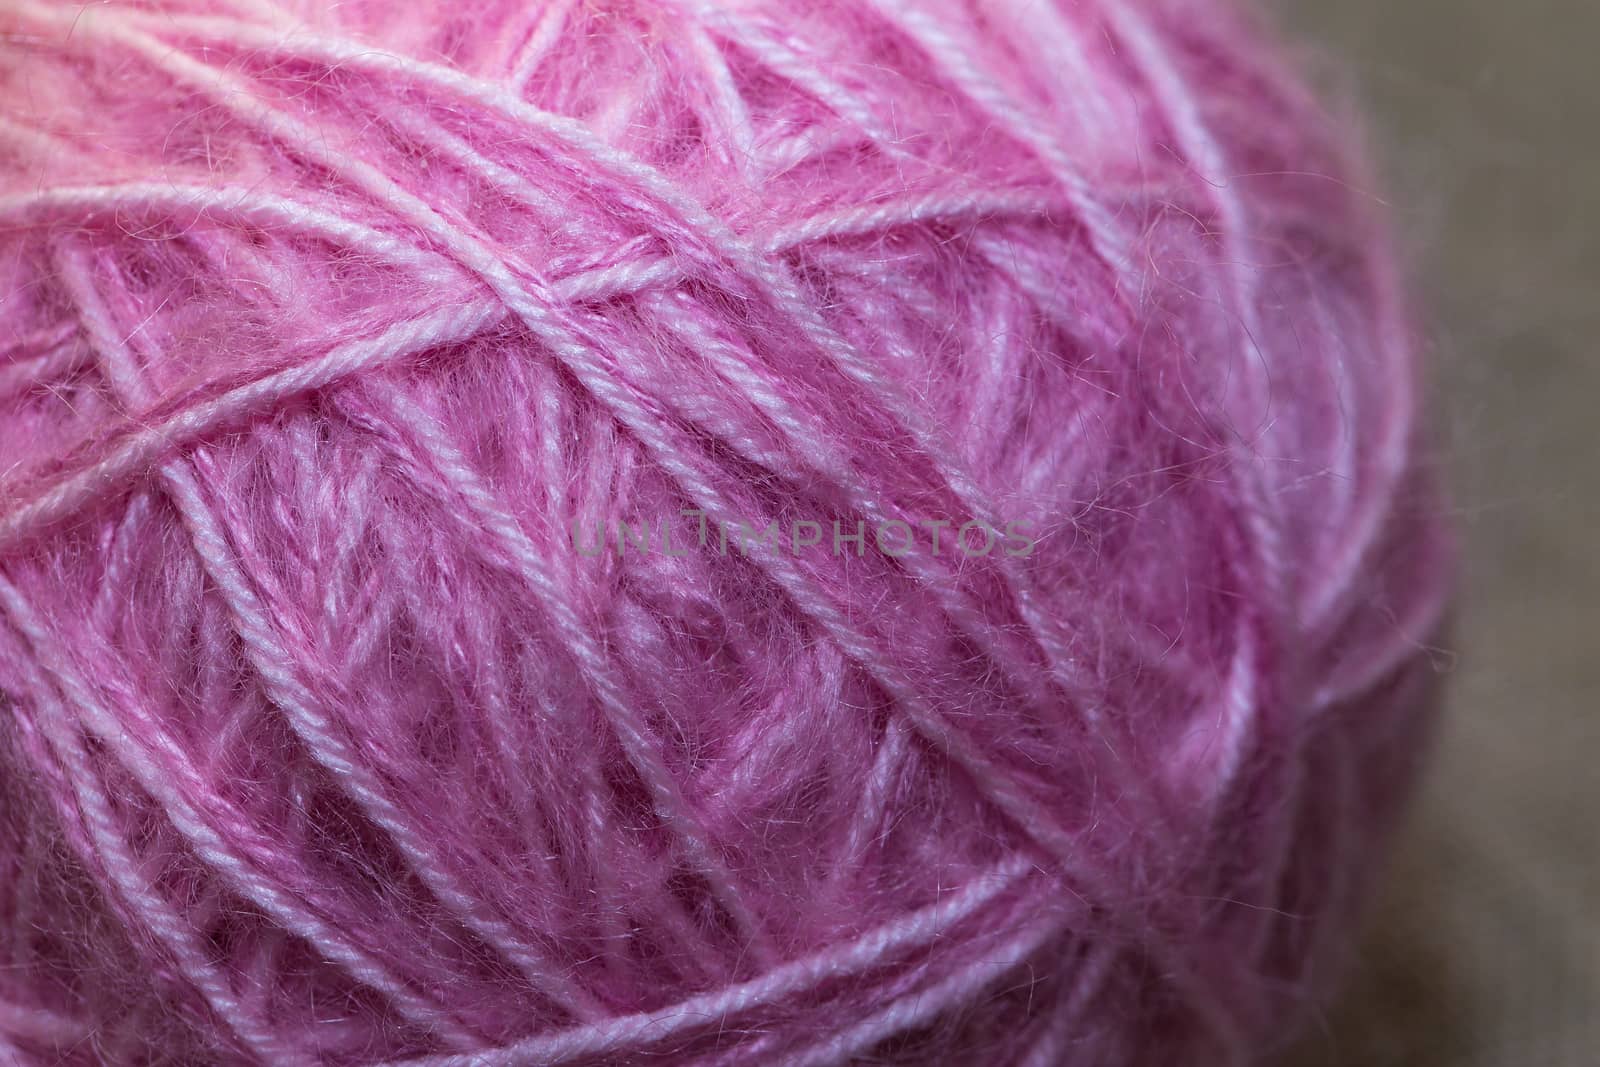 pink ball of yarn closeup